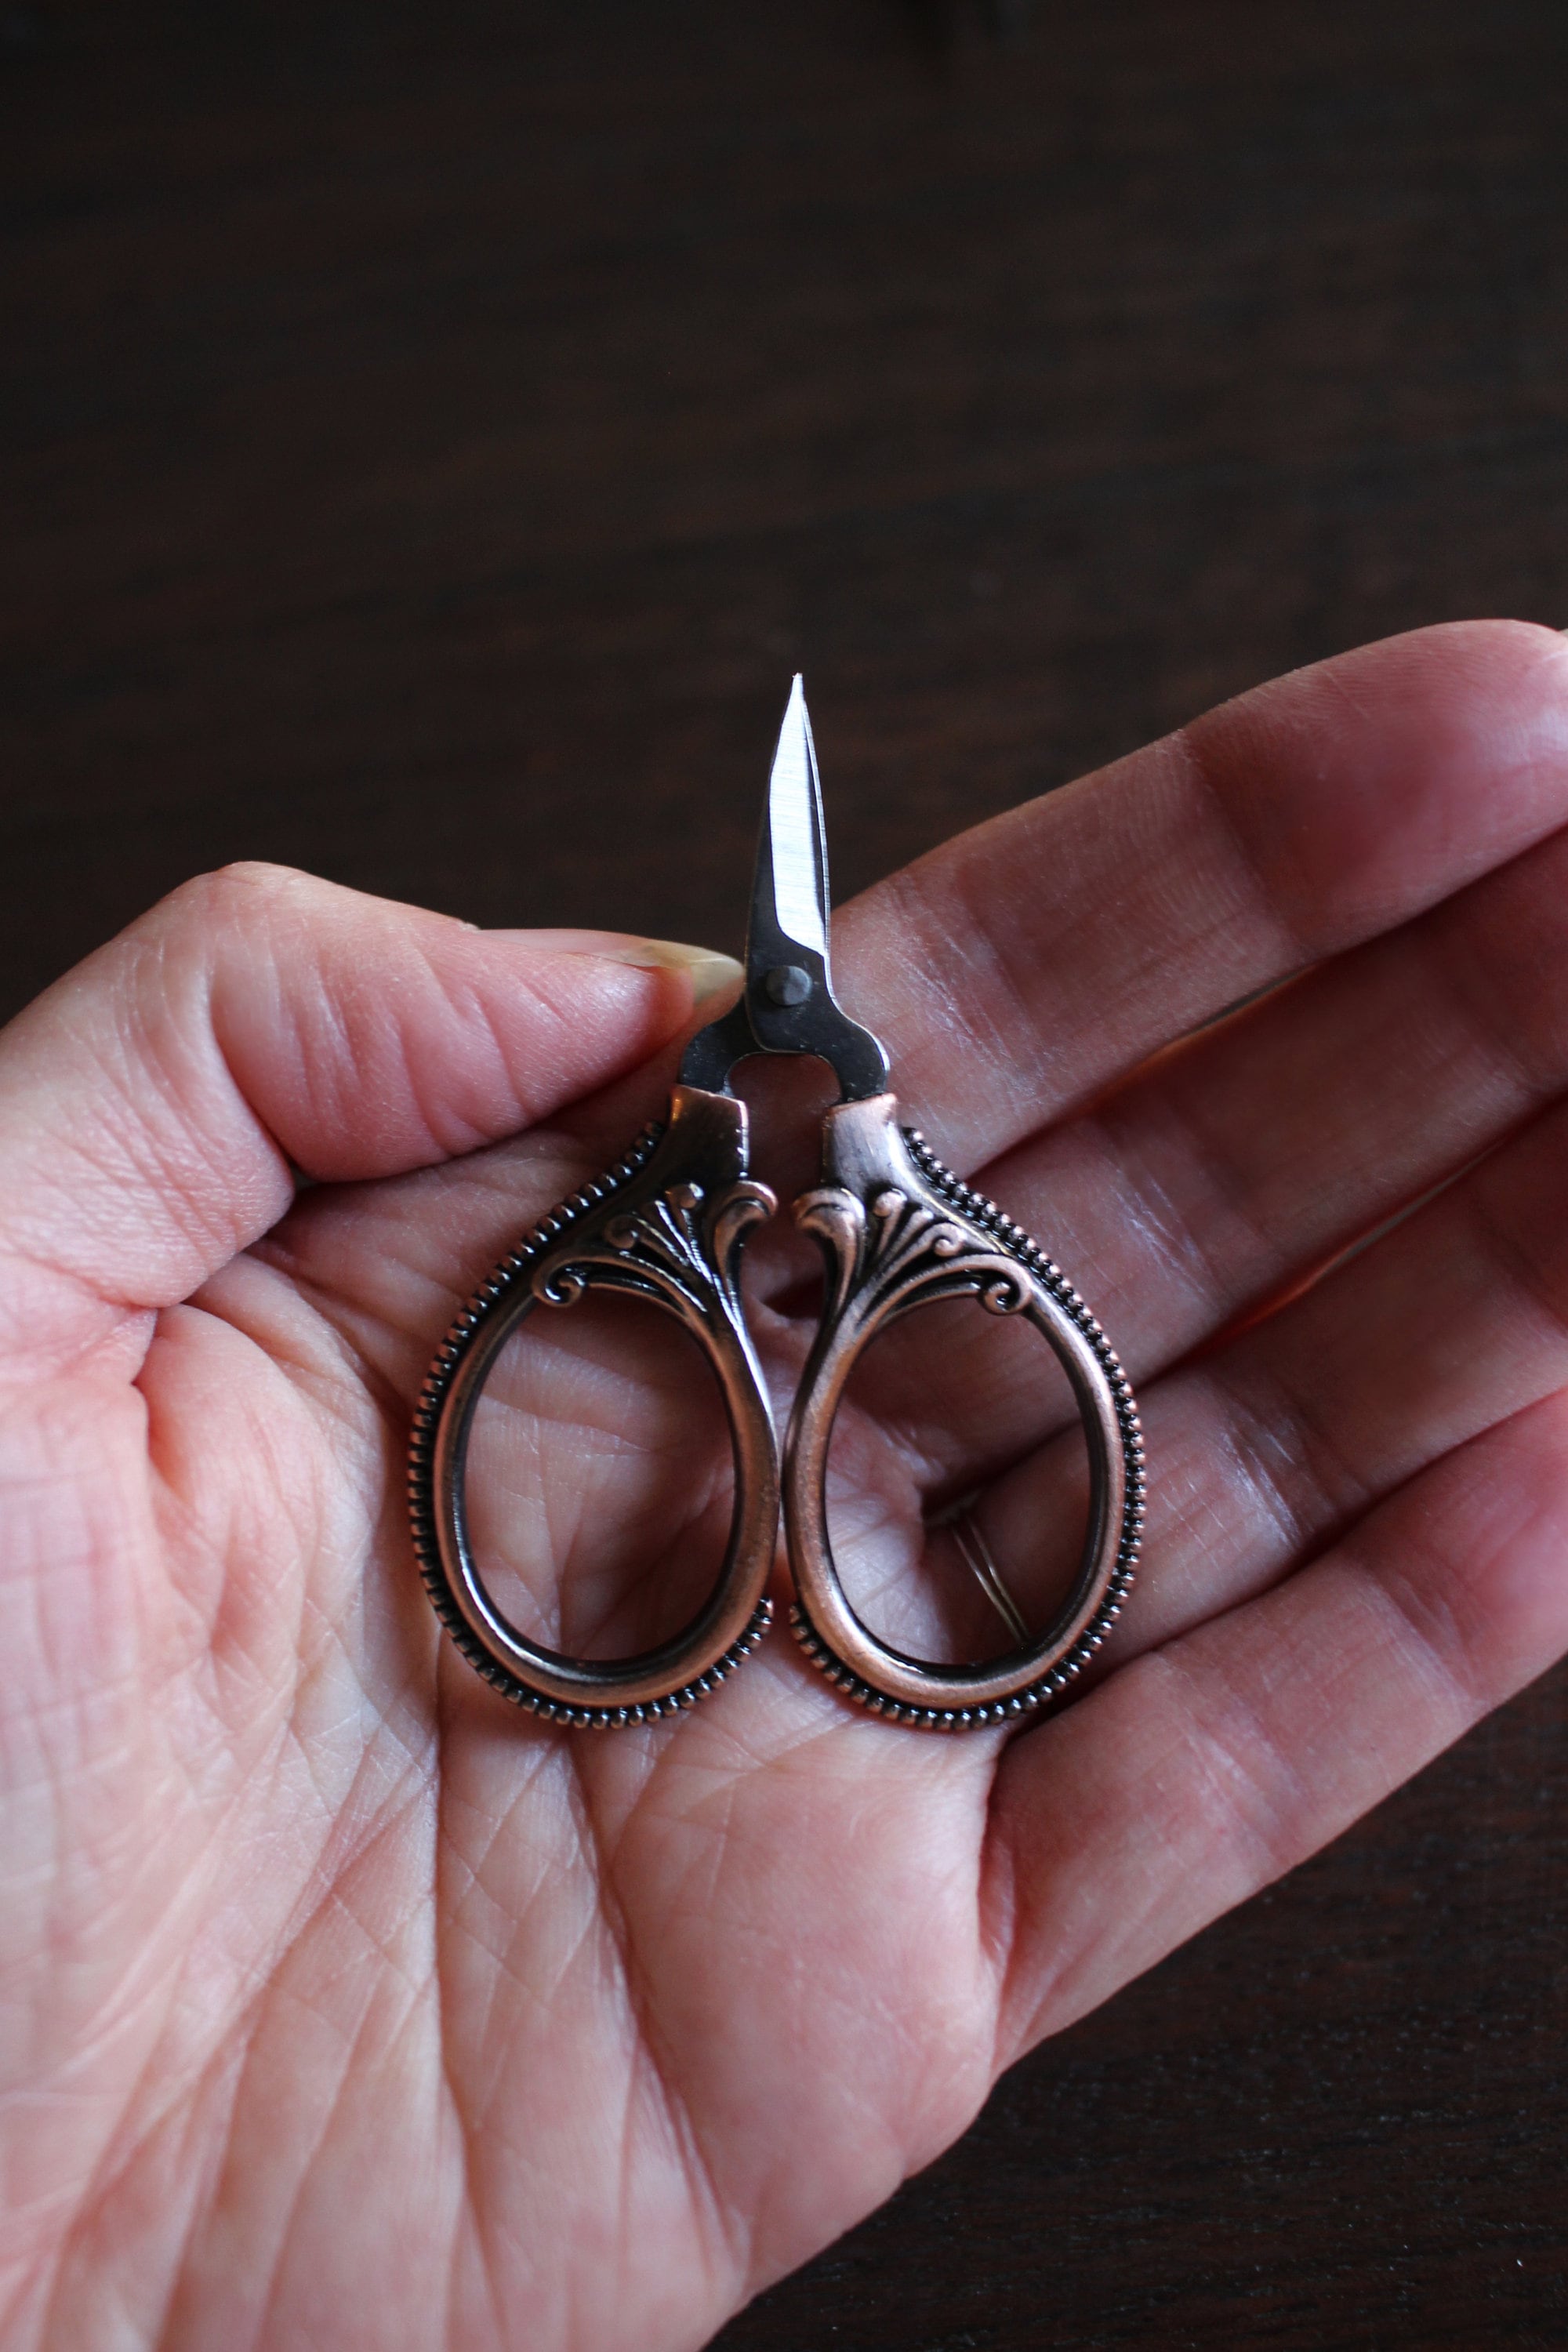 Small Scissors Sewing Kit Stock Photo 679636546